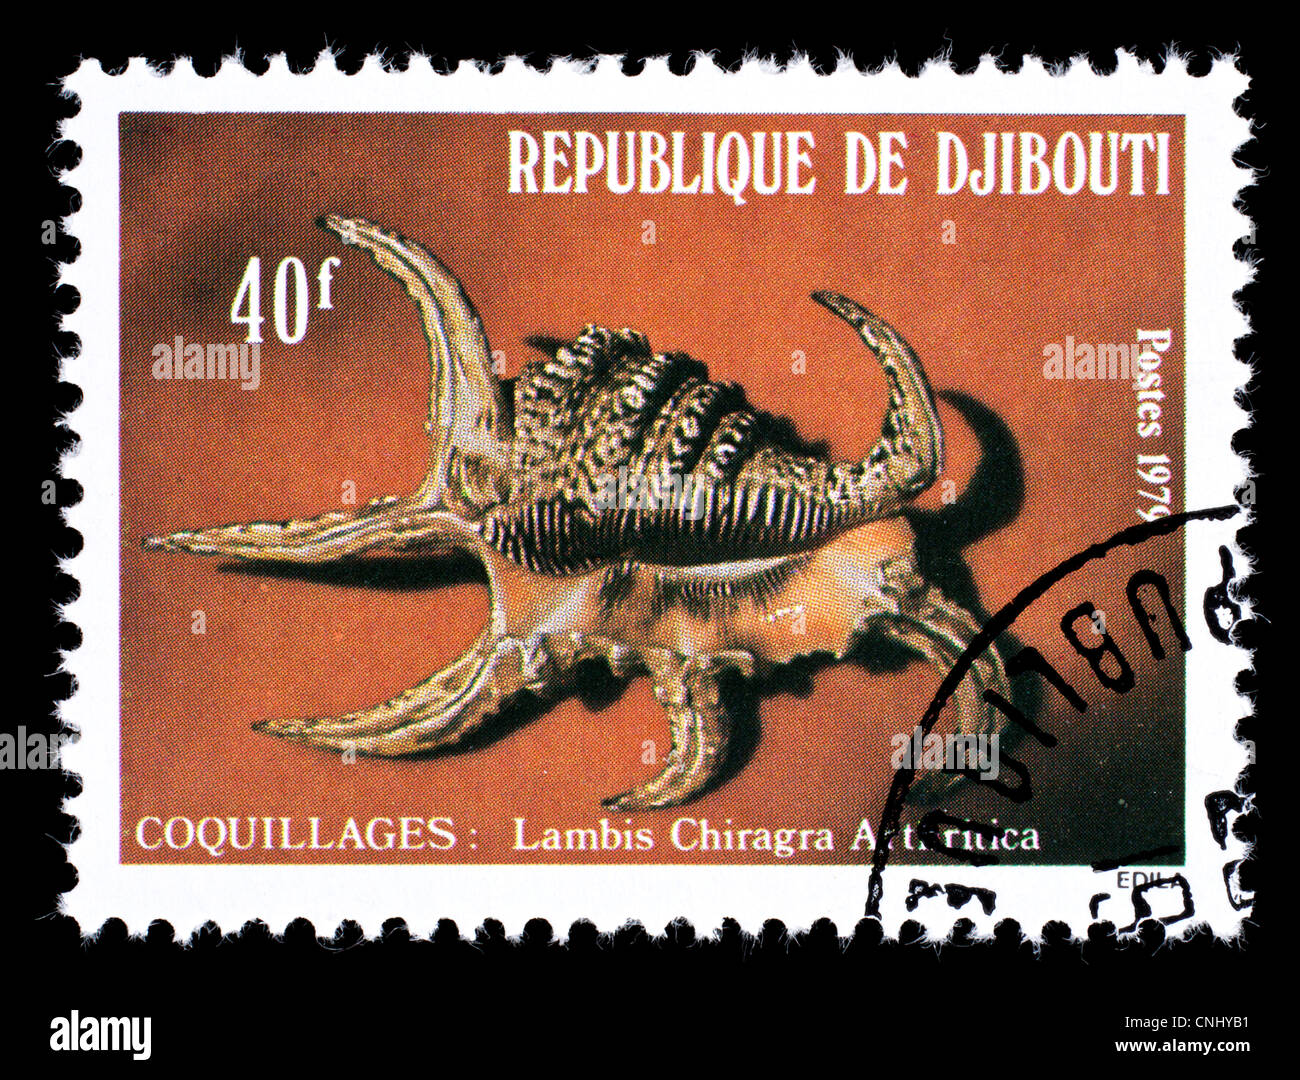 Postage stamp from Djibouti depicting a sea snail, arthritic spider conch (Lambis chiragra arthritica) Stock Photo